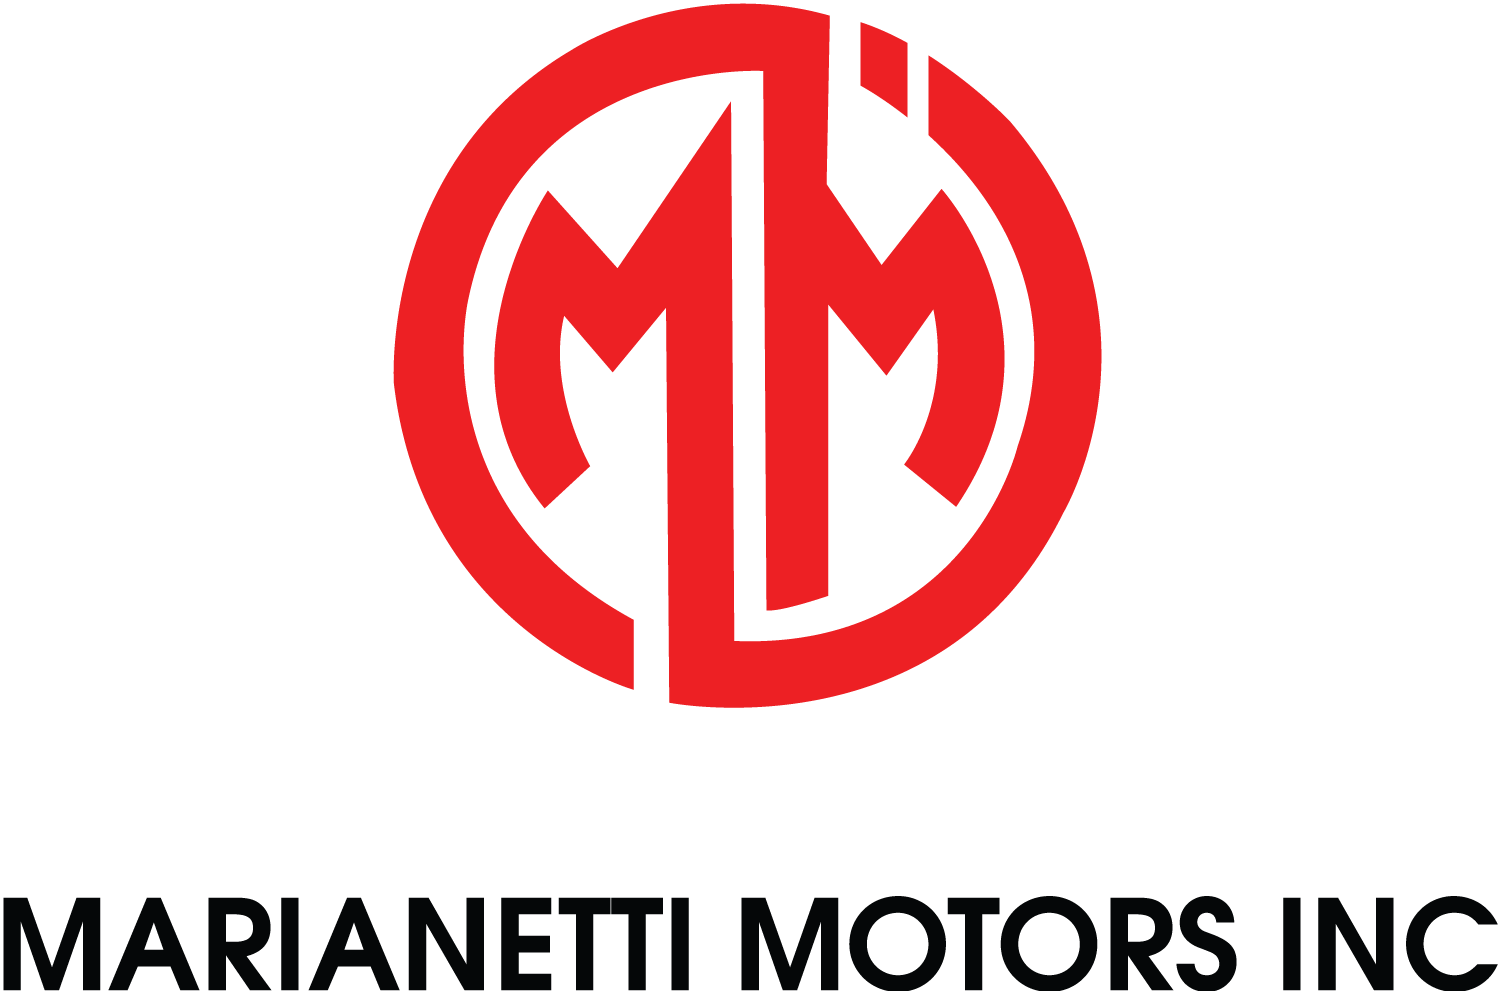 MMI Logo - Modern, Masculine, Automotive Logo Design for MMI Marianetti Motors ...